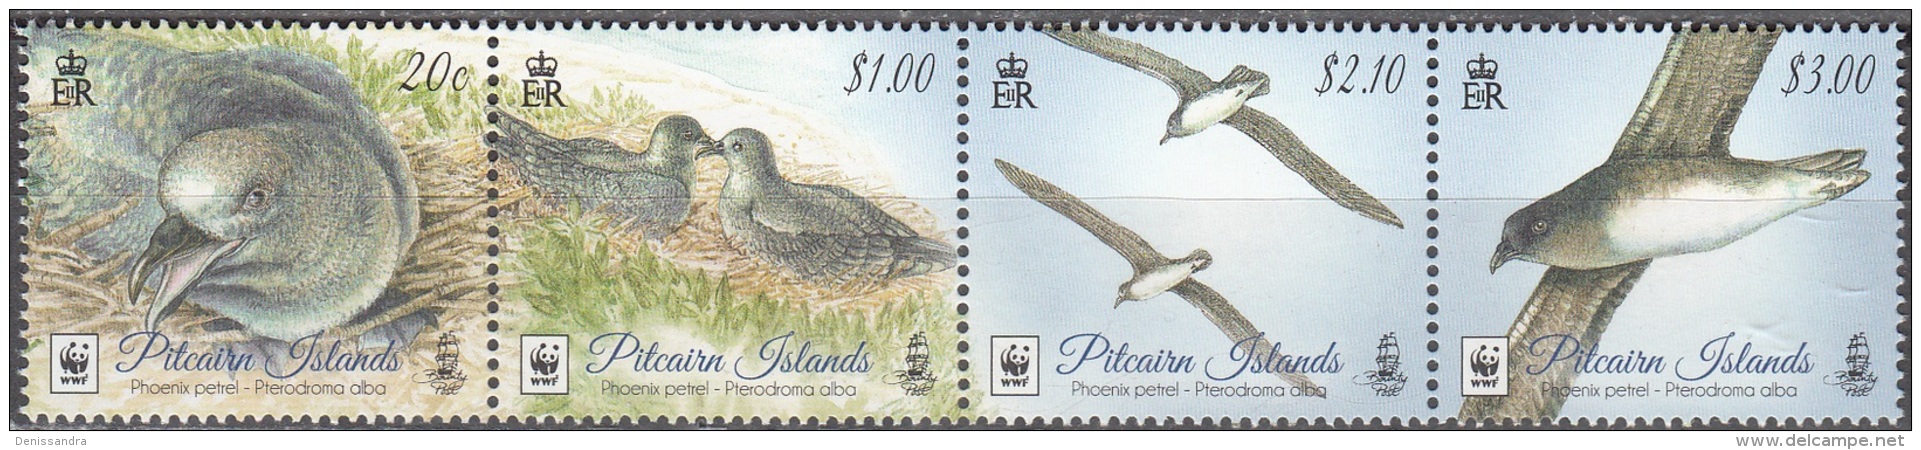 Pitcairn Islands 2016 WWF Pétrel à Poitrine Blanche Neuf ** - Pitcairn